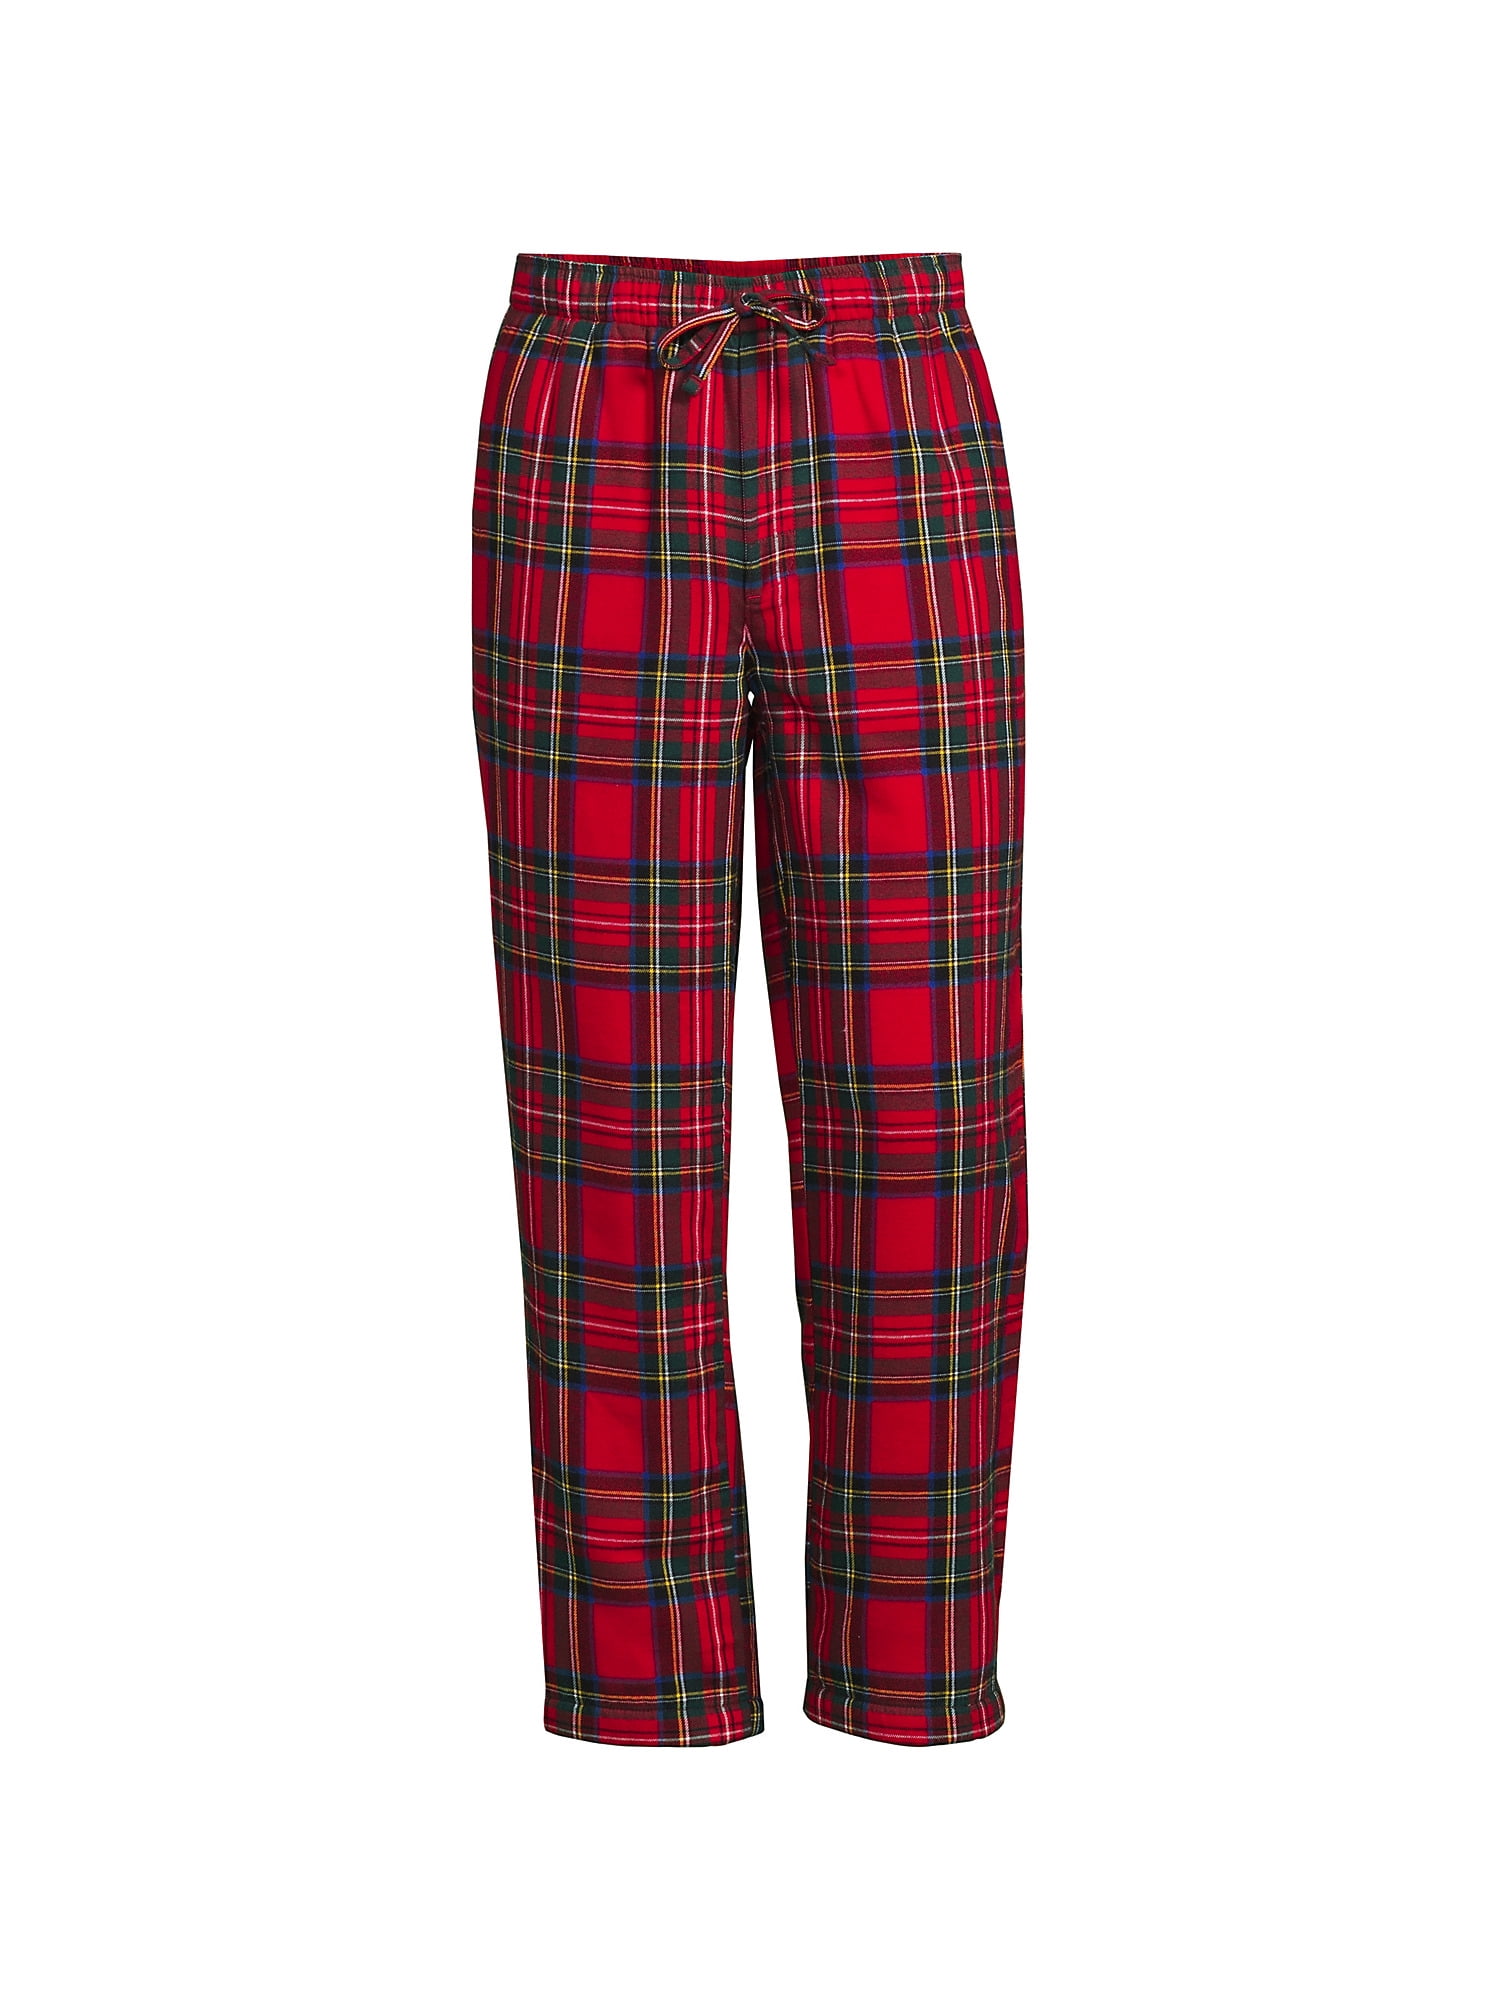 Lands' End Men's High Pile Fleece Lined Flannel Pajama Pants 